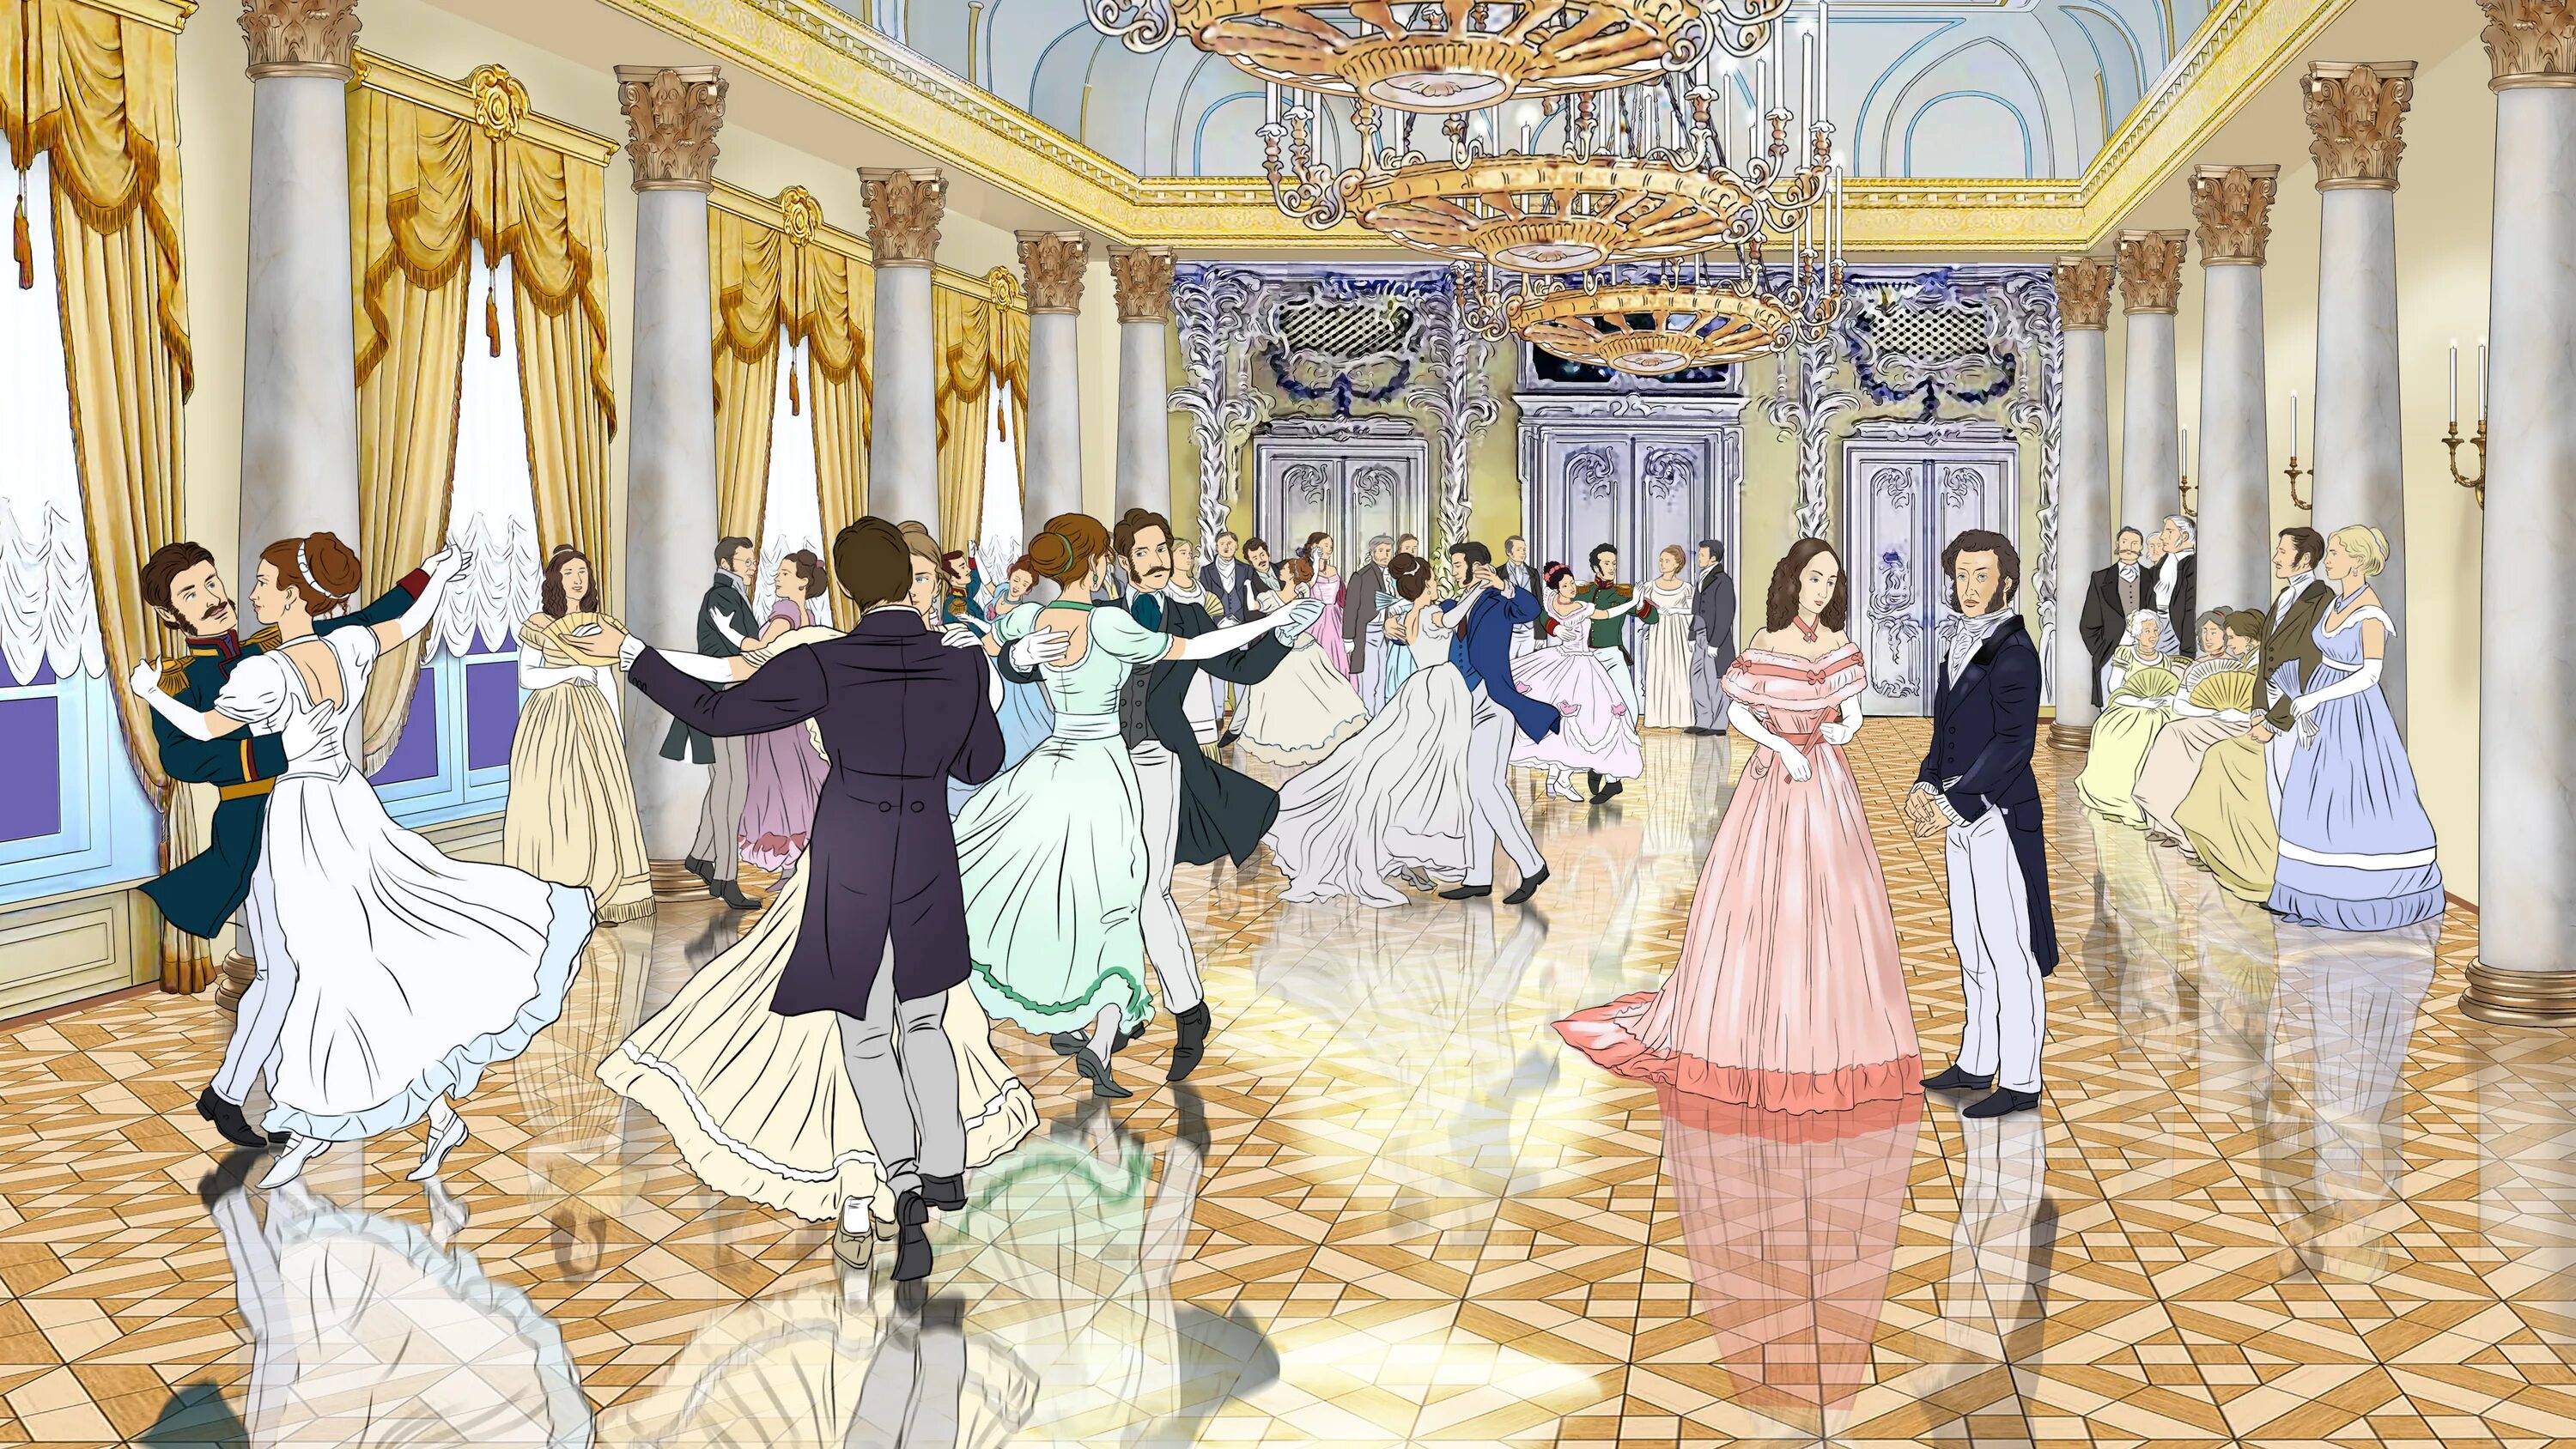 Еще раз перечитайте эпизод бал. Пушкинский бал 19 век. Бал во Дворце.